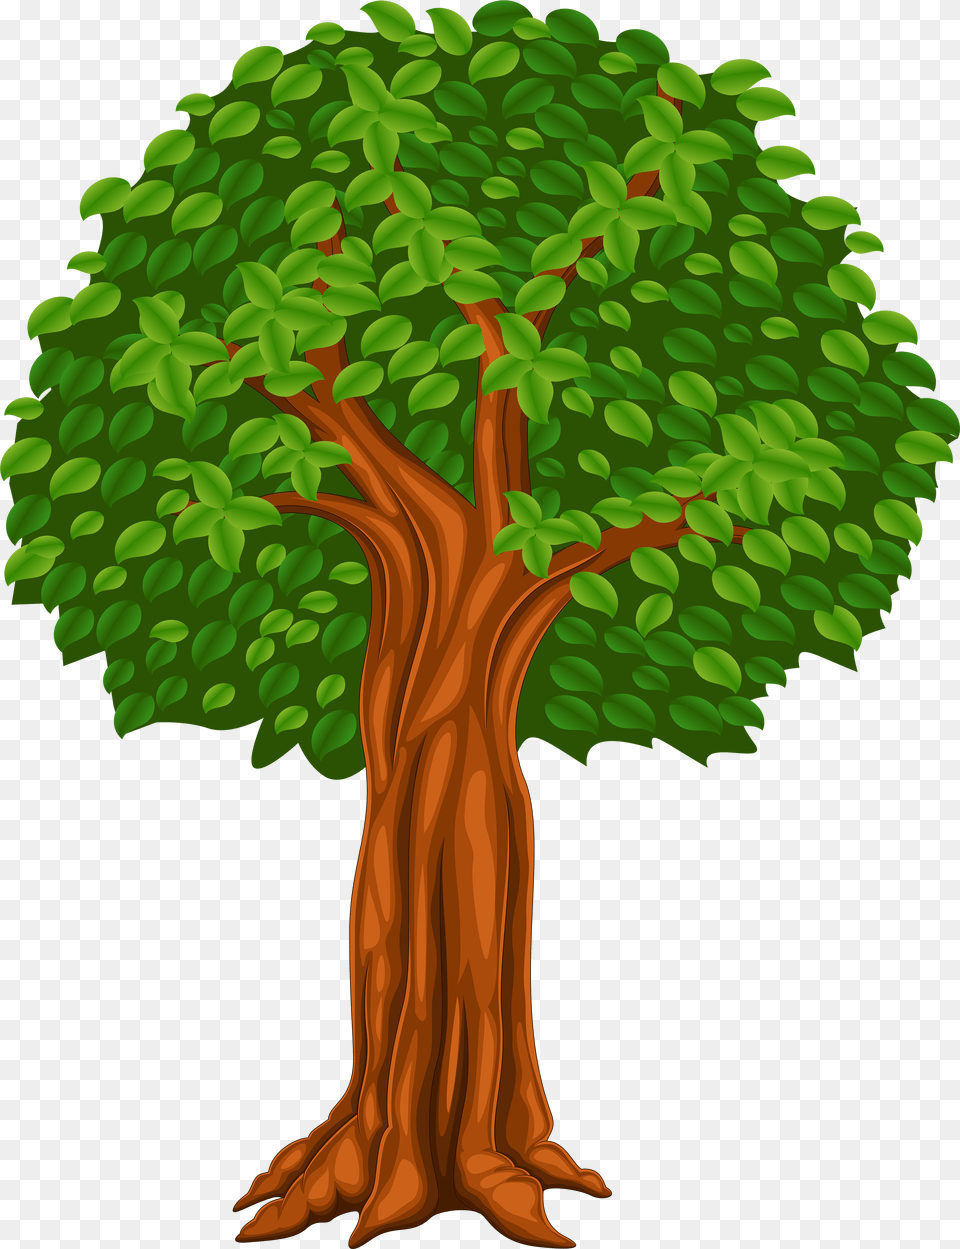 Tree Illustration Image Transparent Tree Cartoon Free Png Download